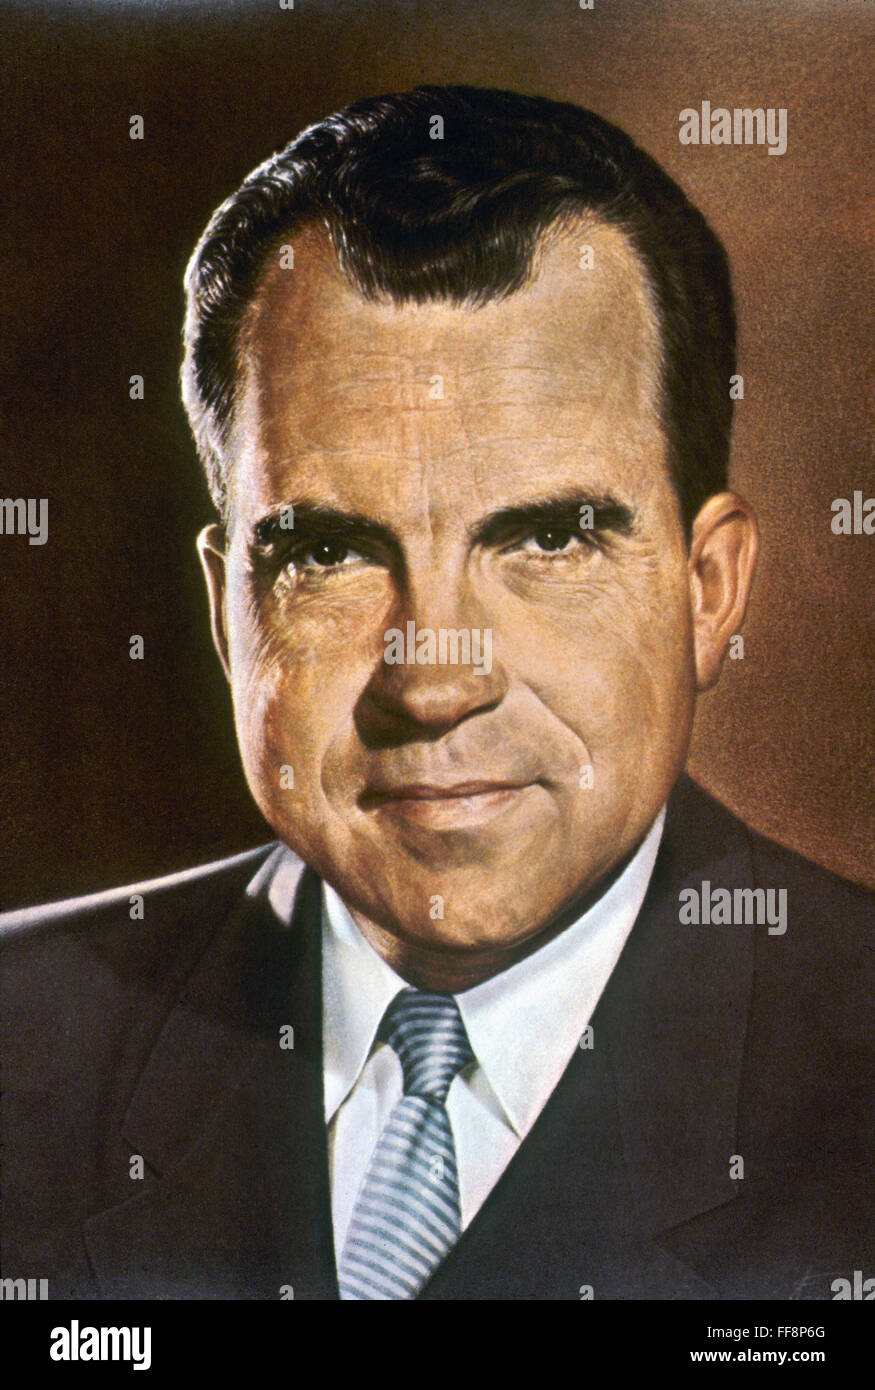 RICHARD M. NIXON /n(1913-1994). 37th President of the United States. Stock Photo